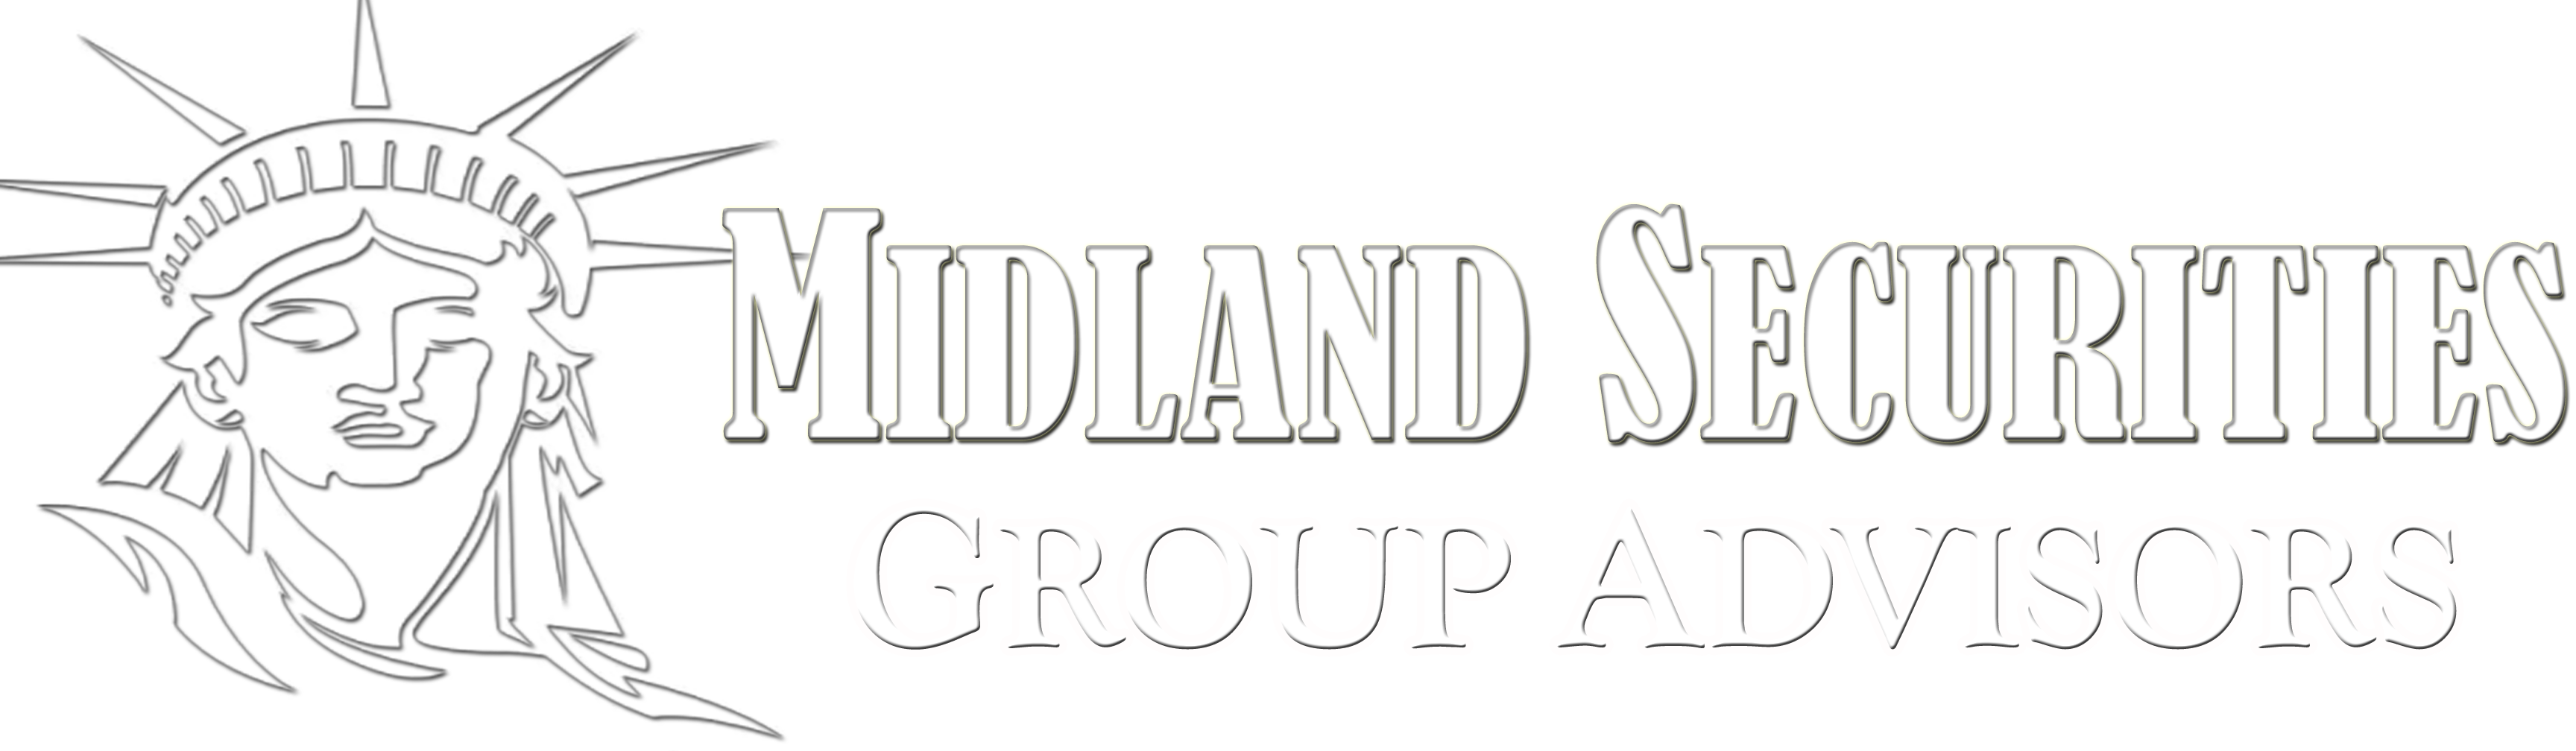 Midland Securities Group Advisors